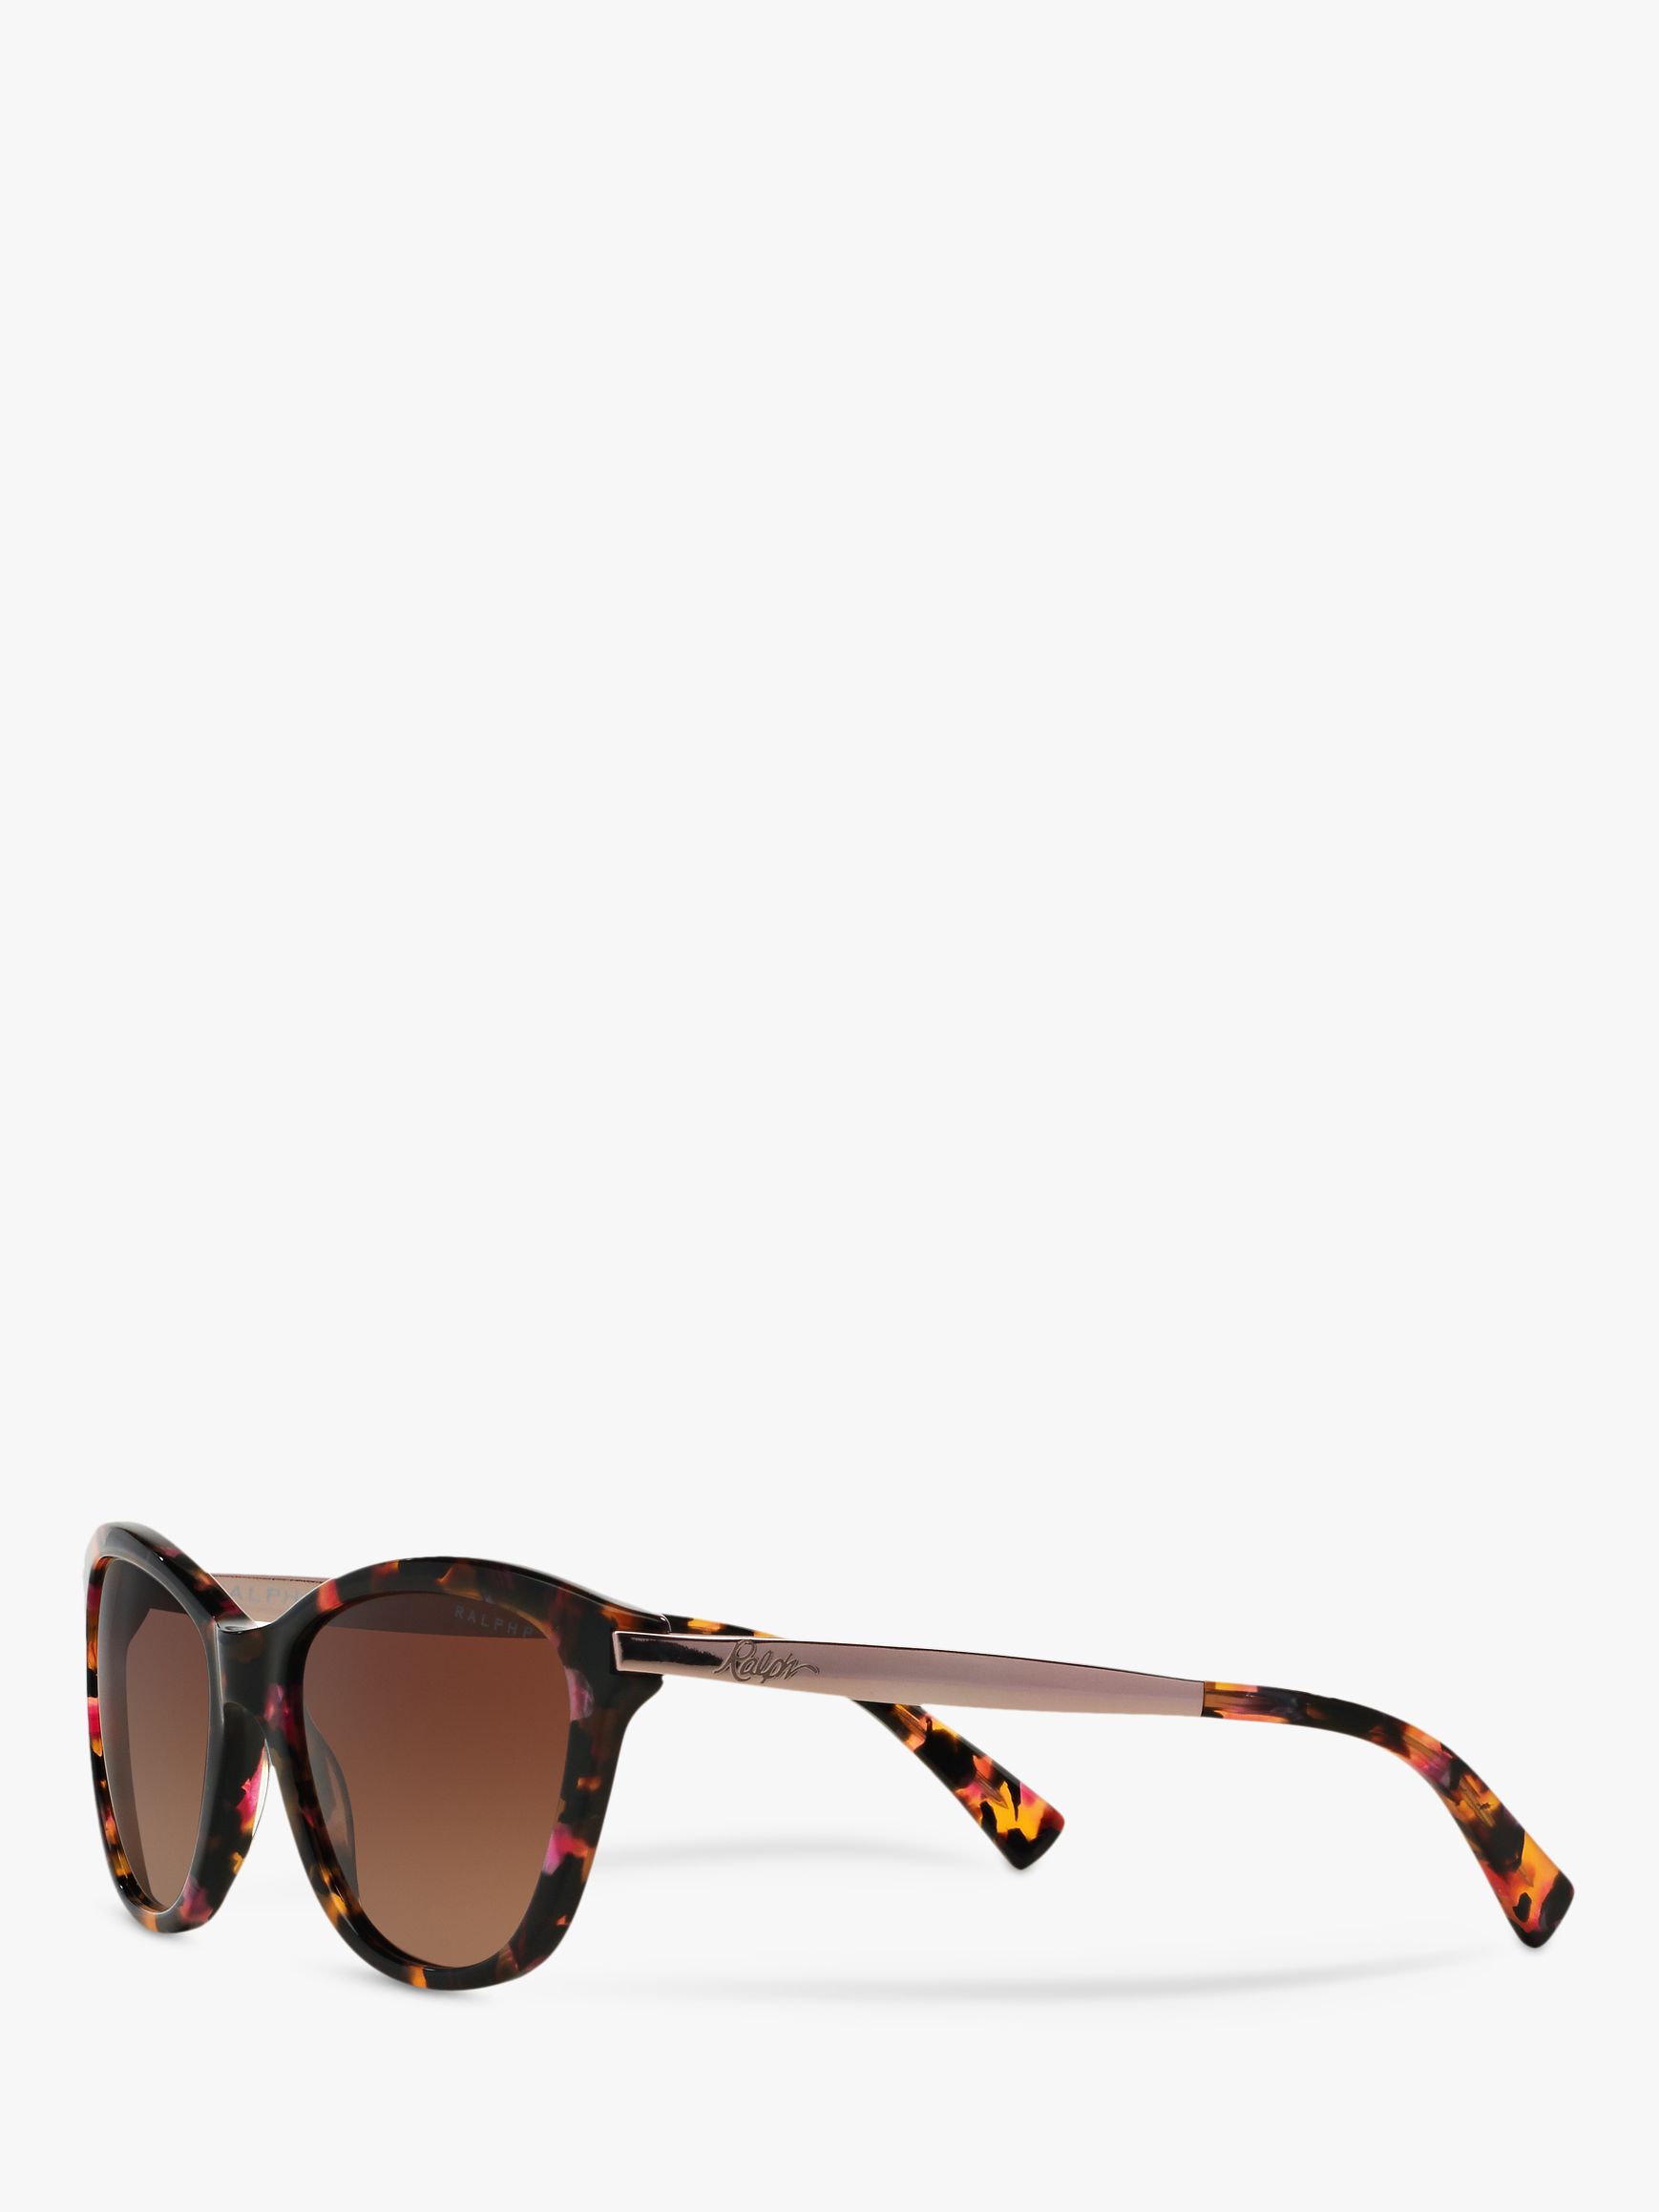 Ralph RA5201 Polarised Cat's Eye Sunglasses, Pink Tortoise/Brown Gradient